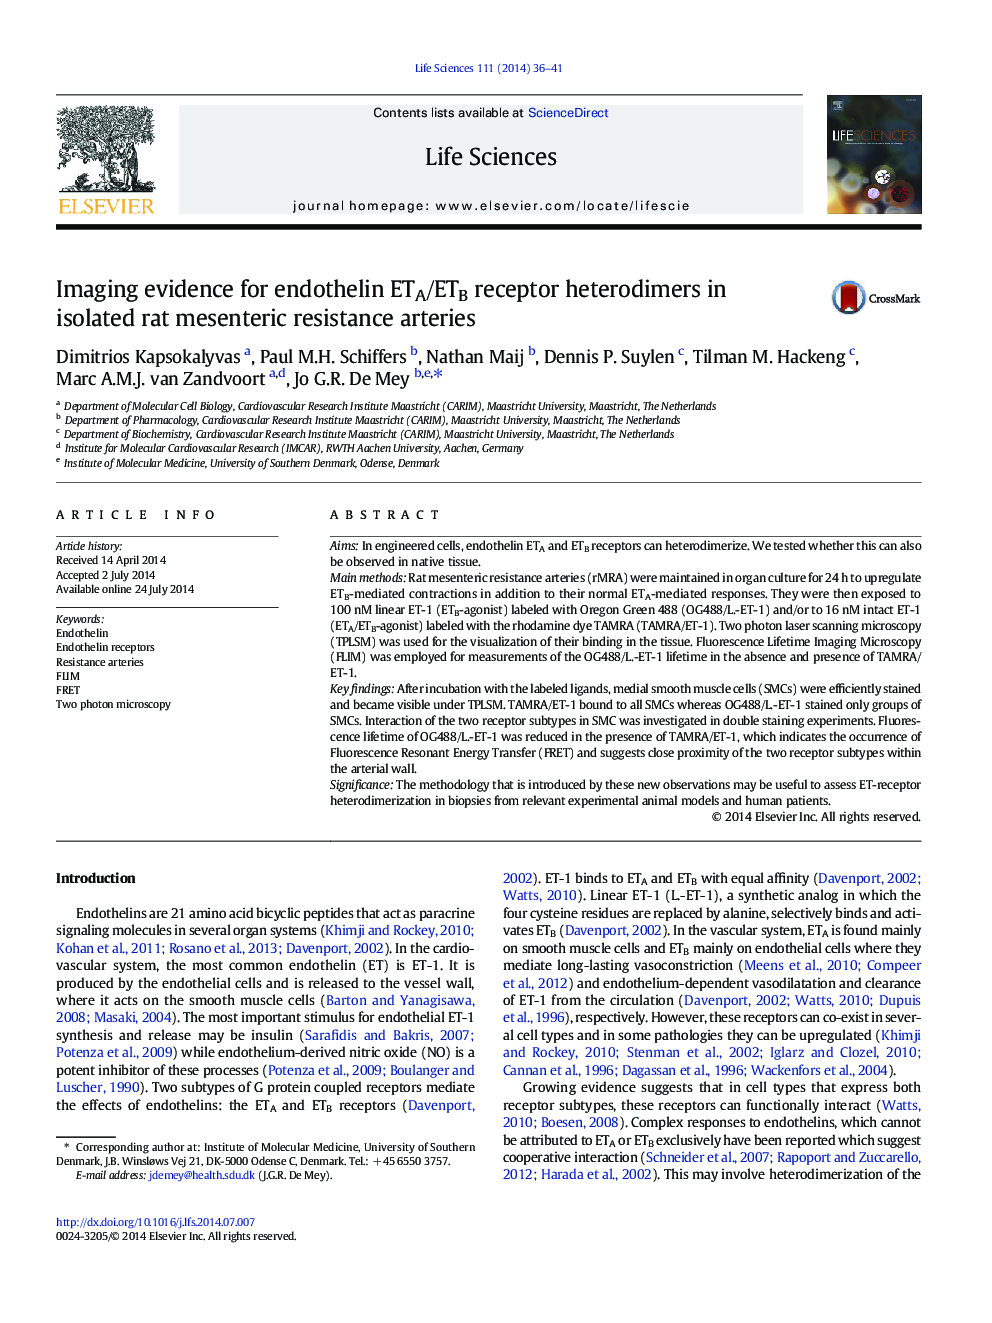 Imaging evidence for endothelin ETA/ETB receptor heterodimers in isolated rat mesenteric resistance arteries